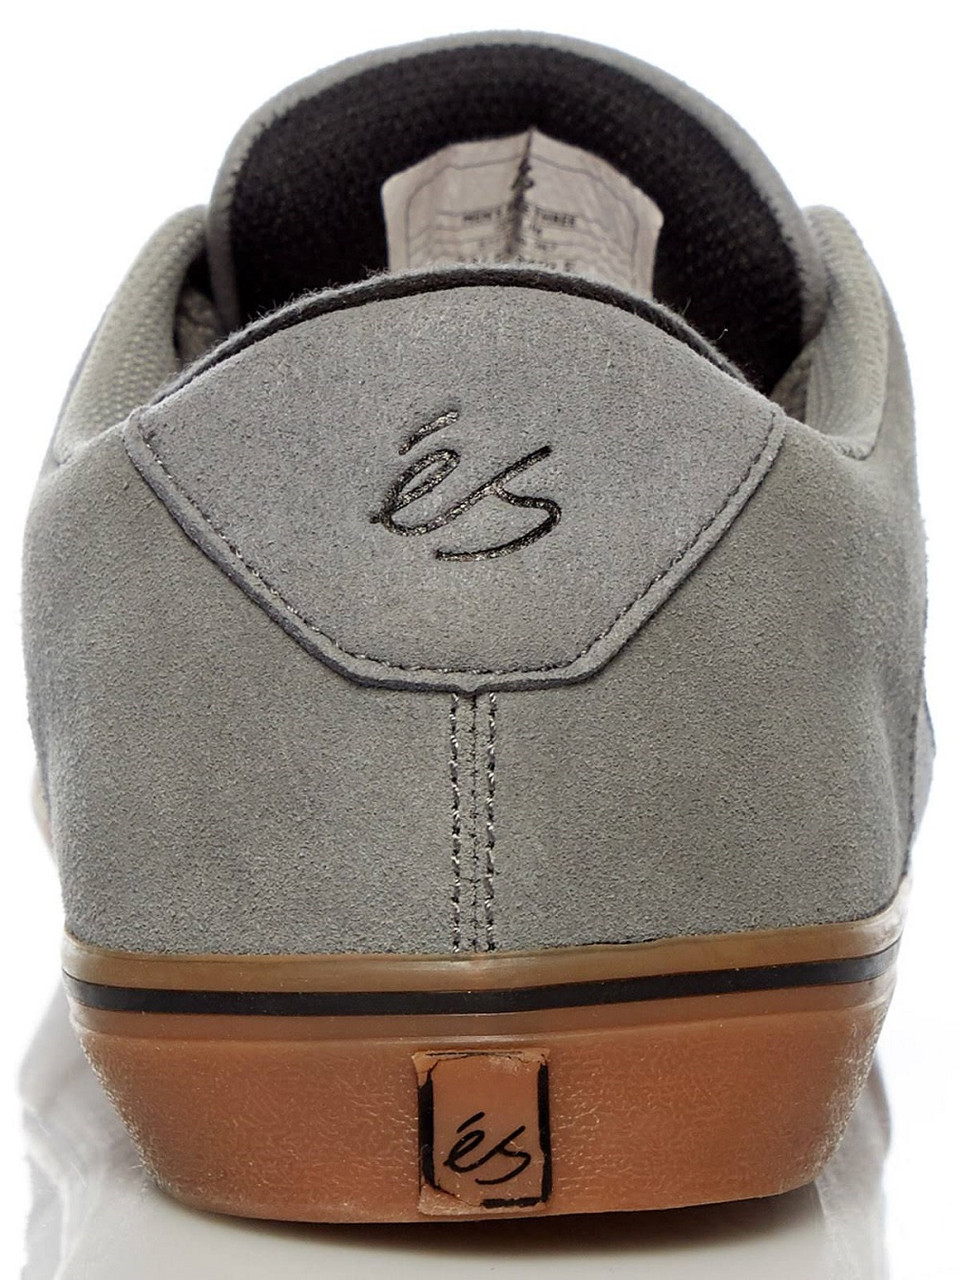 ES Square Three Skate Shoes Grey Gum